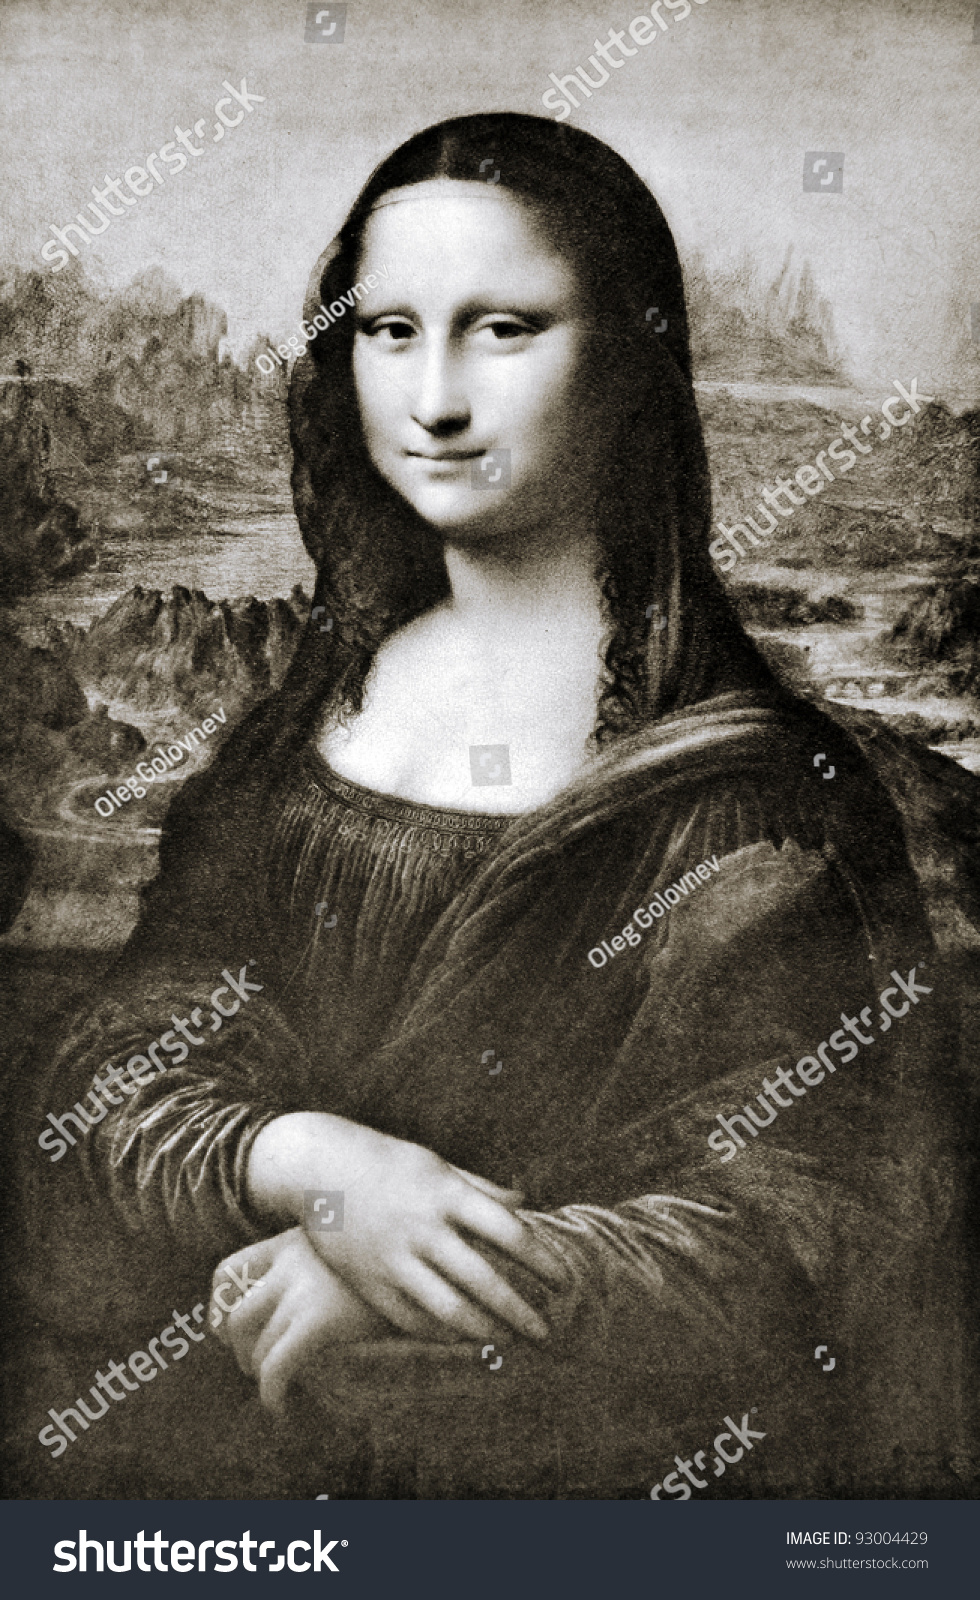 Leonardo da Vinci (1452 - 1519) "Mona Lisa" La Gioconda. Reproduction from illustrated Encyclopedia "Treasures of art", Partnership «Prosvesheniye», St. Petersburg , Russia , 1906